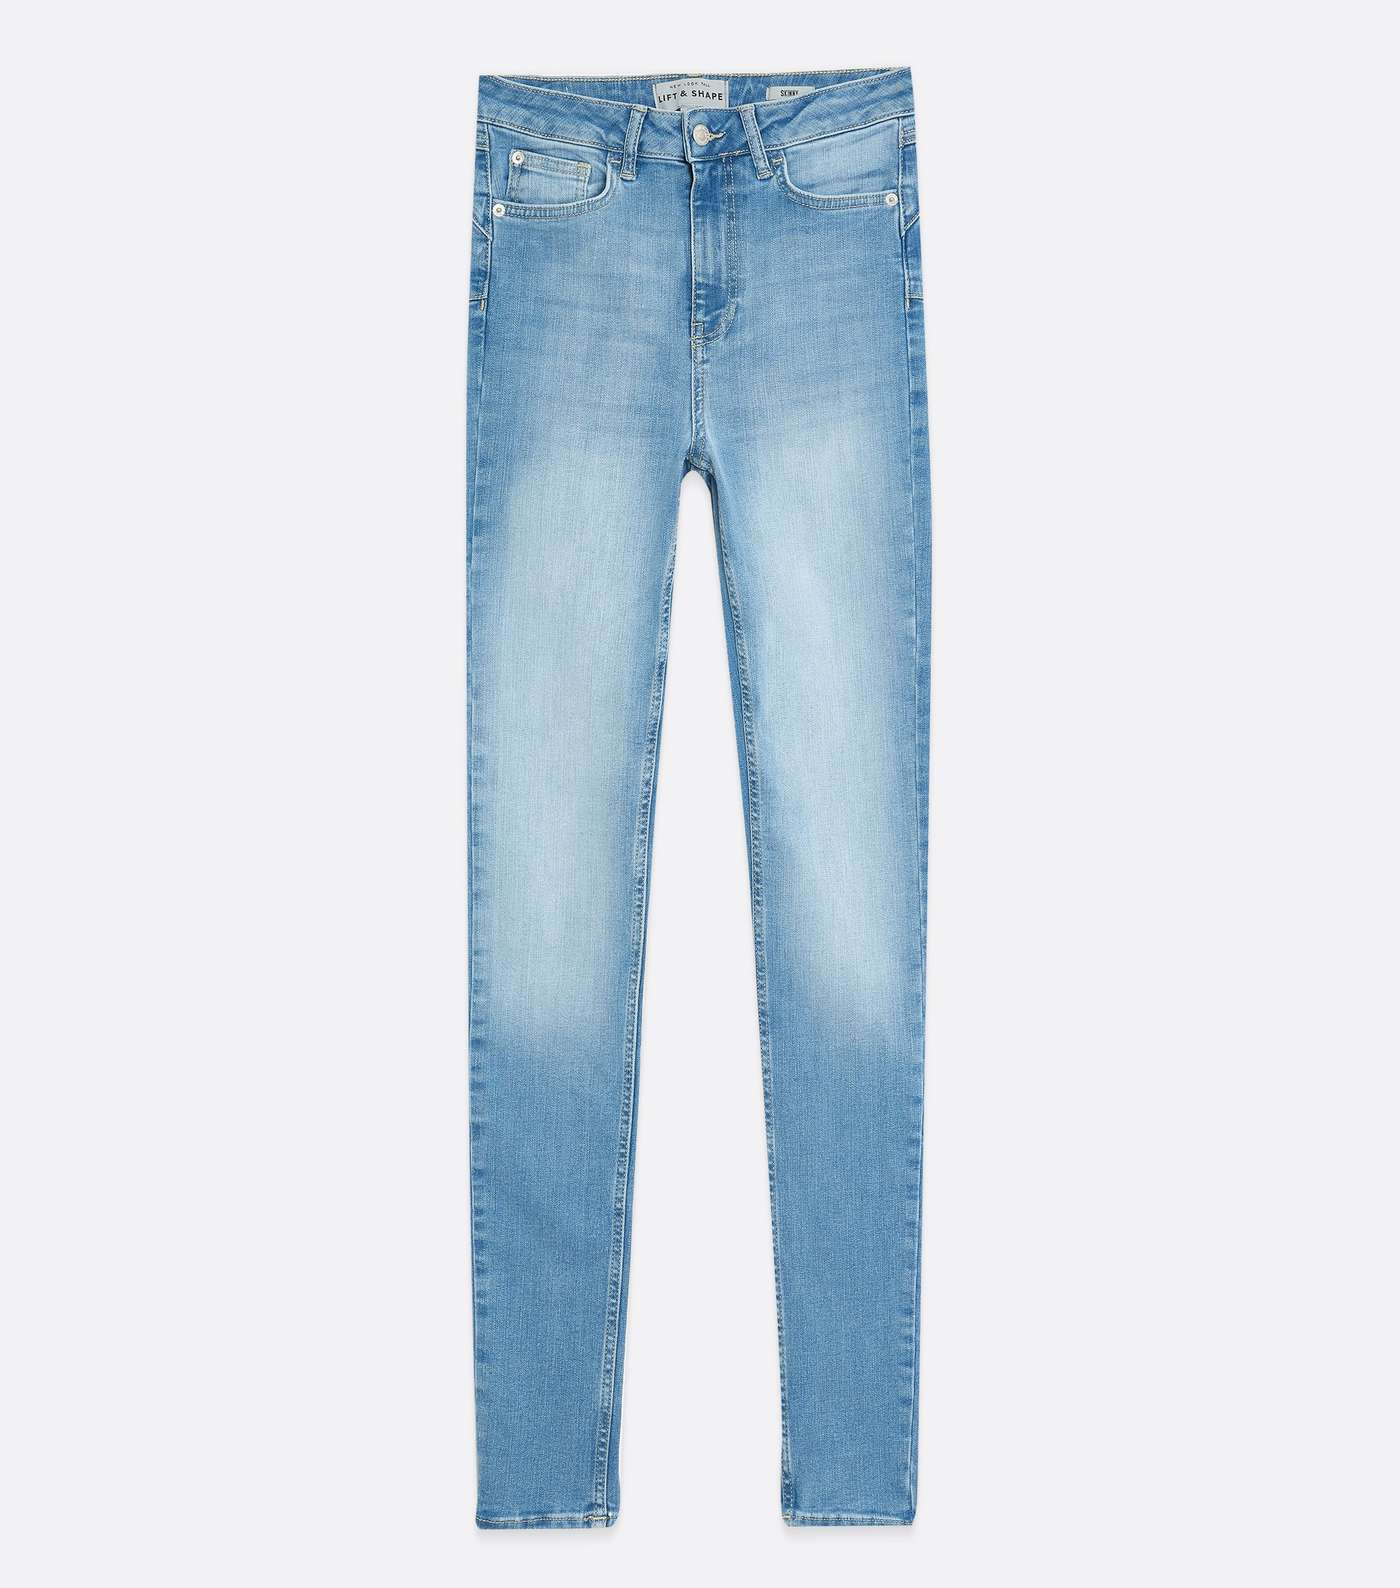 Tall Pale Blue 'Lift & Shape' Jenna Skinny Jeans Image 5